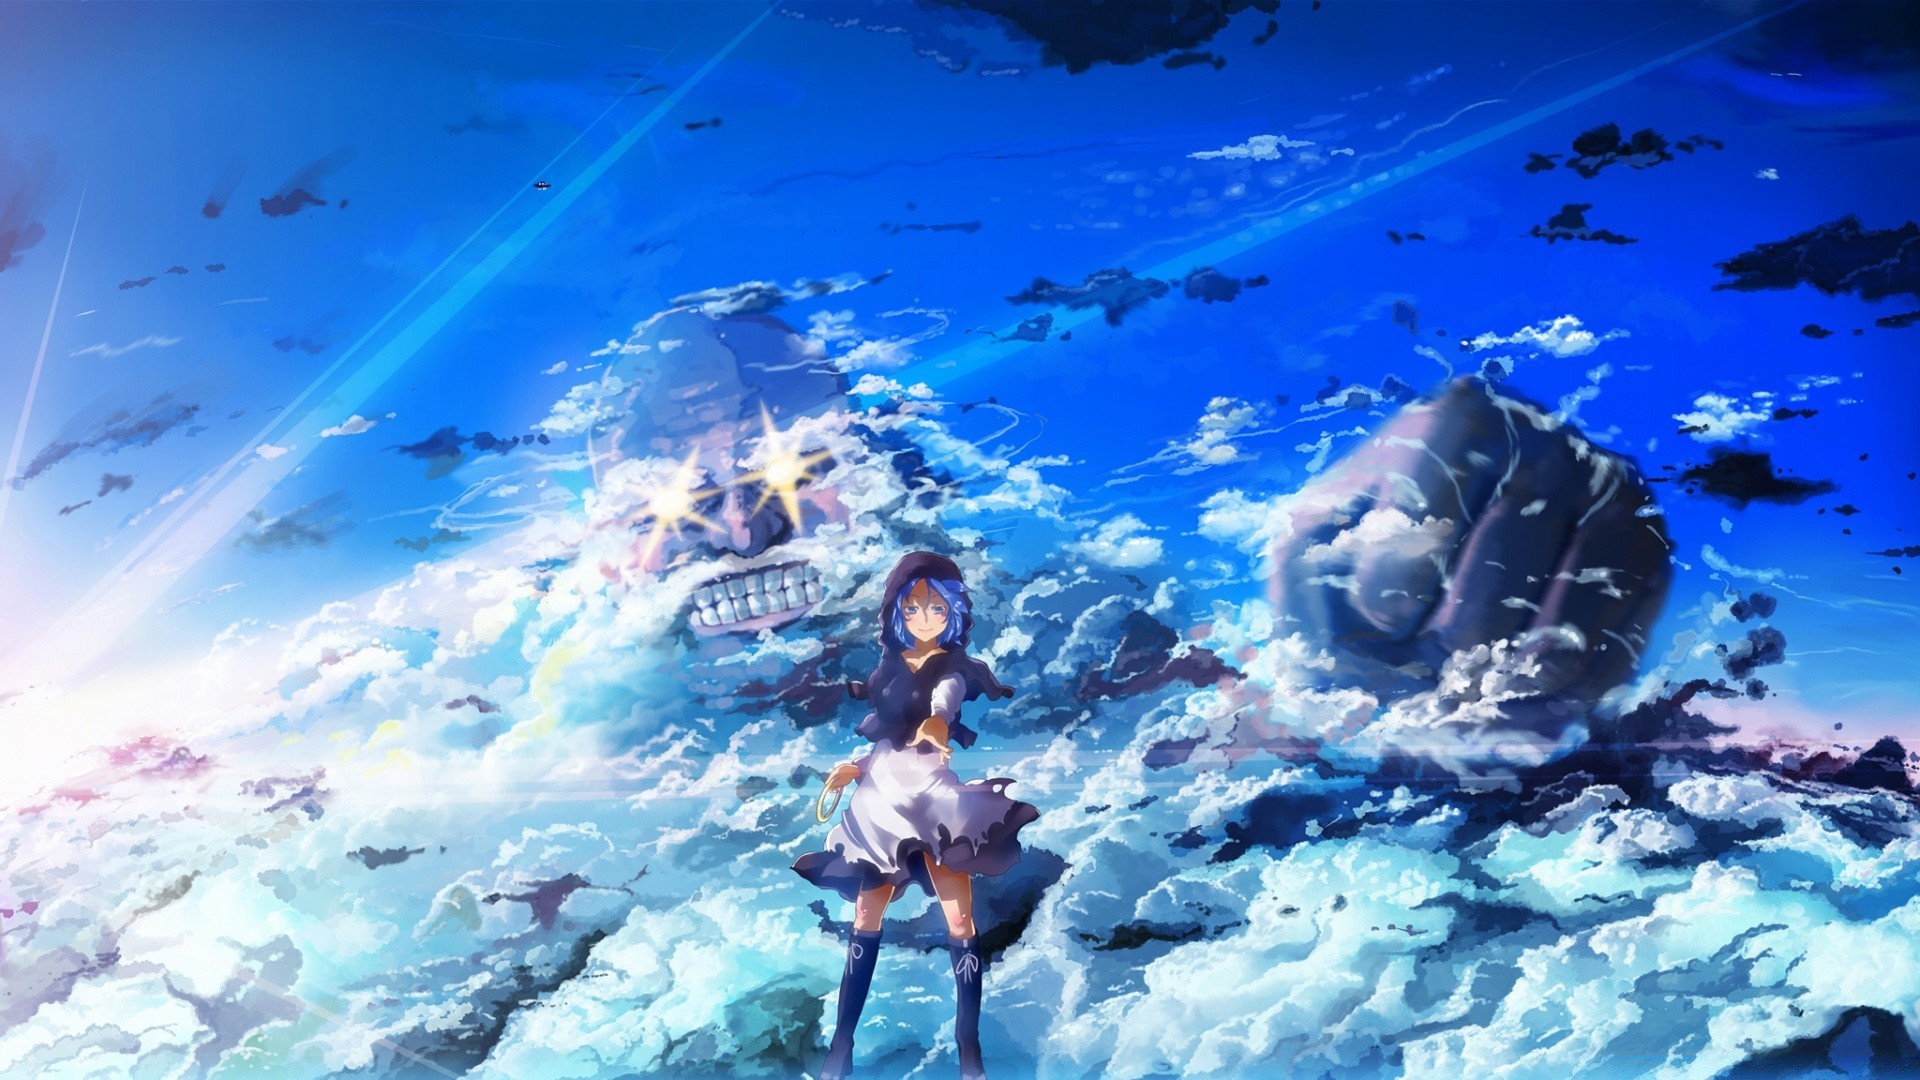 anime underwater water ocean travel sea swimming exploration recreation outdoors